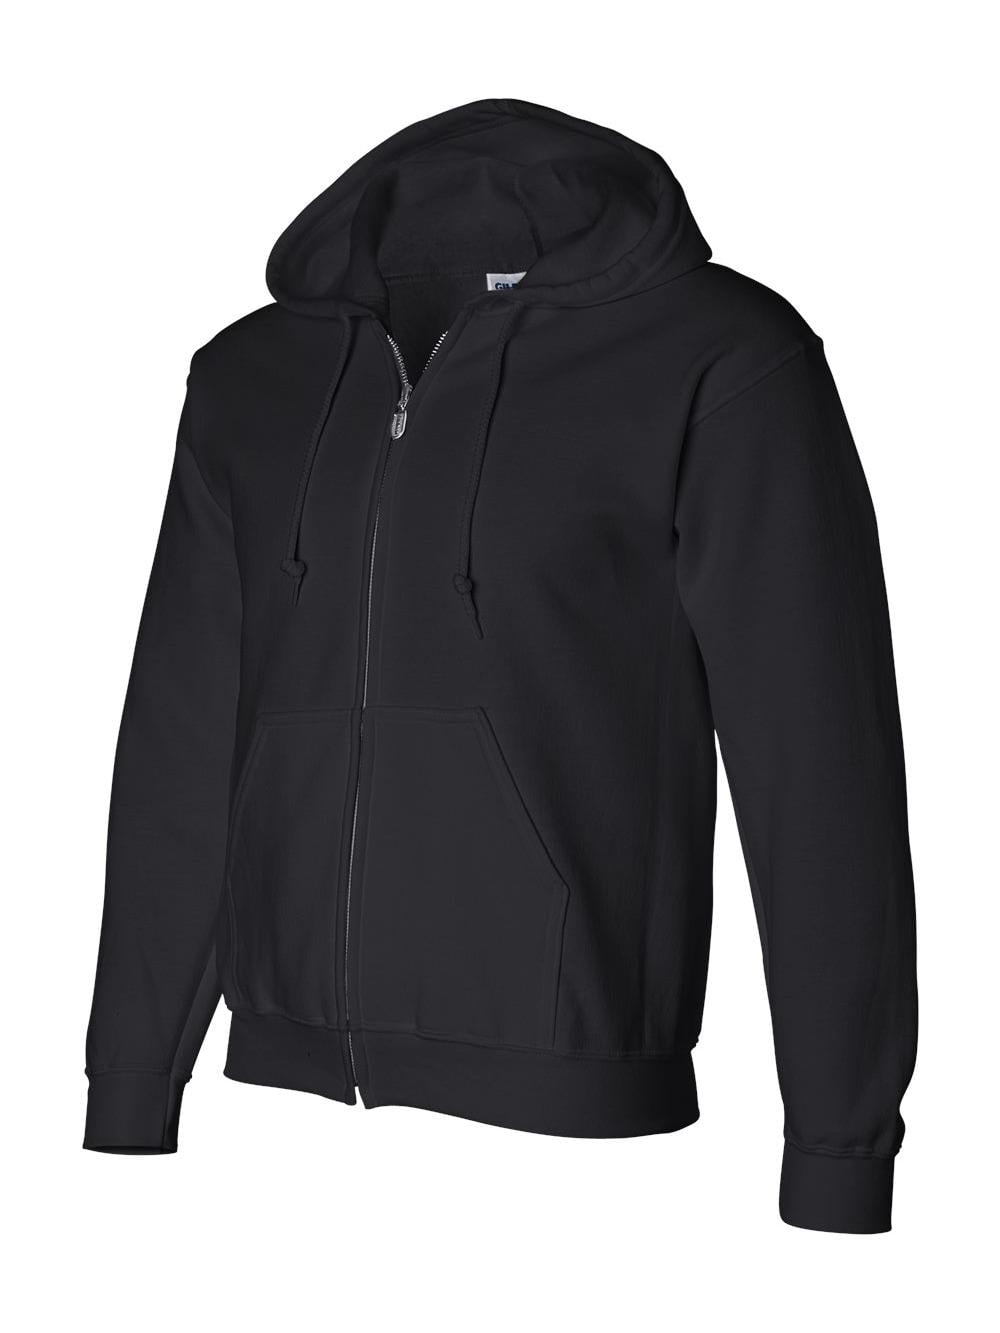 Gildan - DryBlend Full-Zip Hooded Sweatshirt - 12600 - Walmart.com